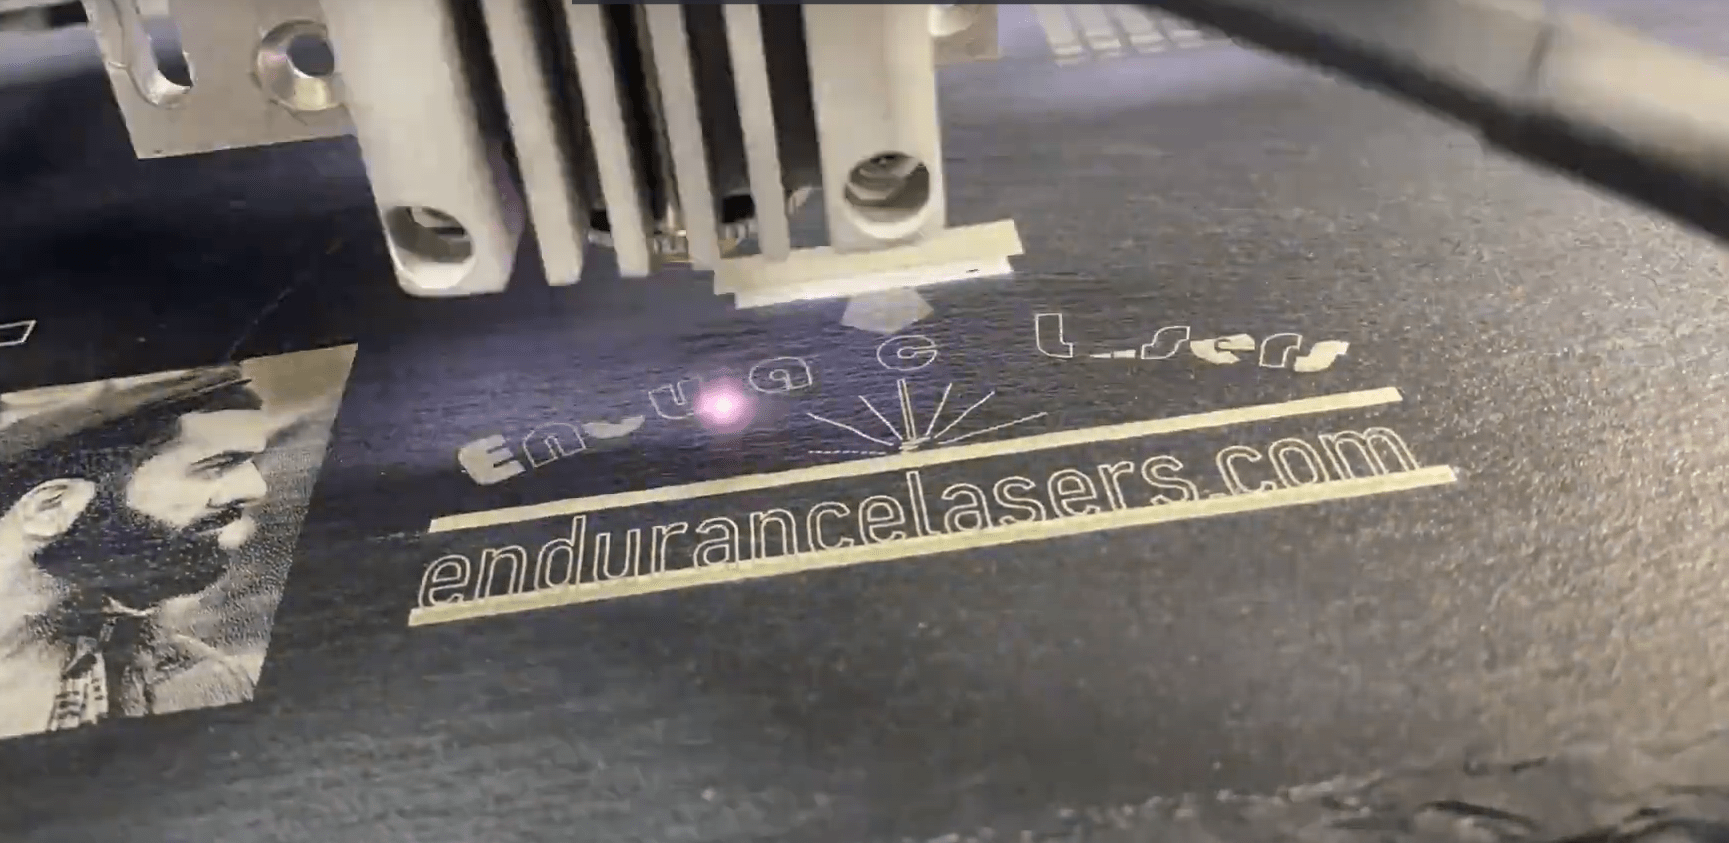 Endurance lasers